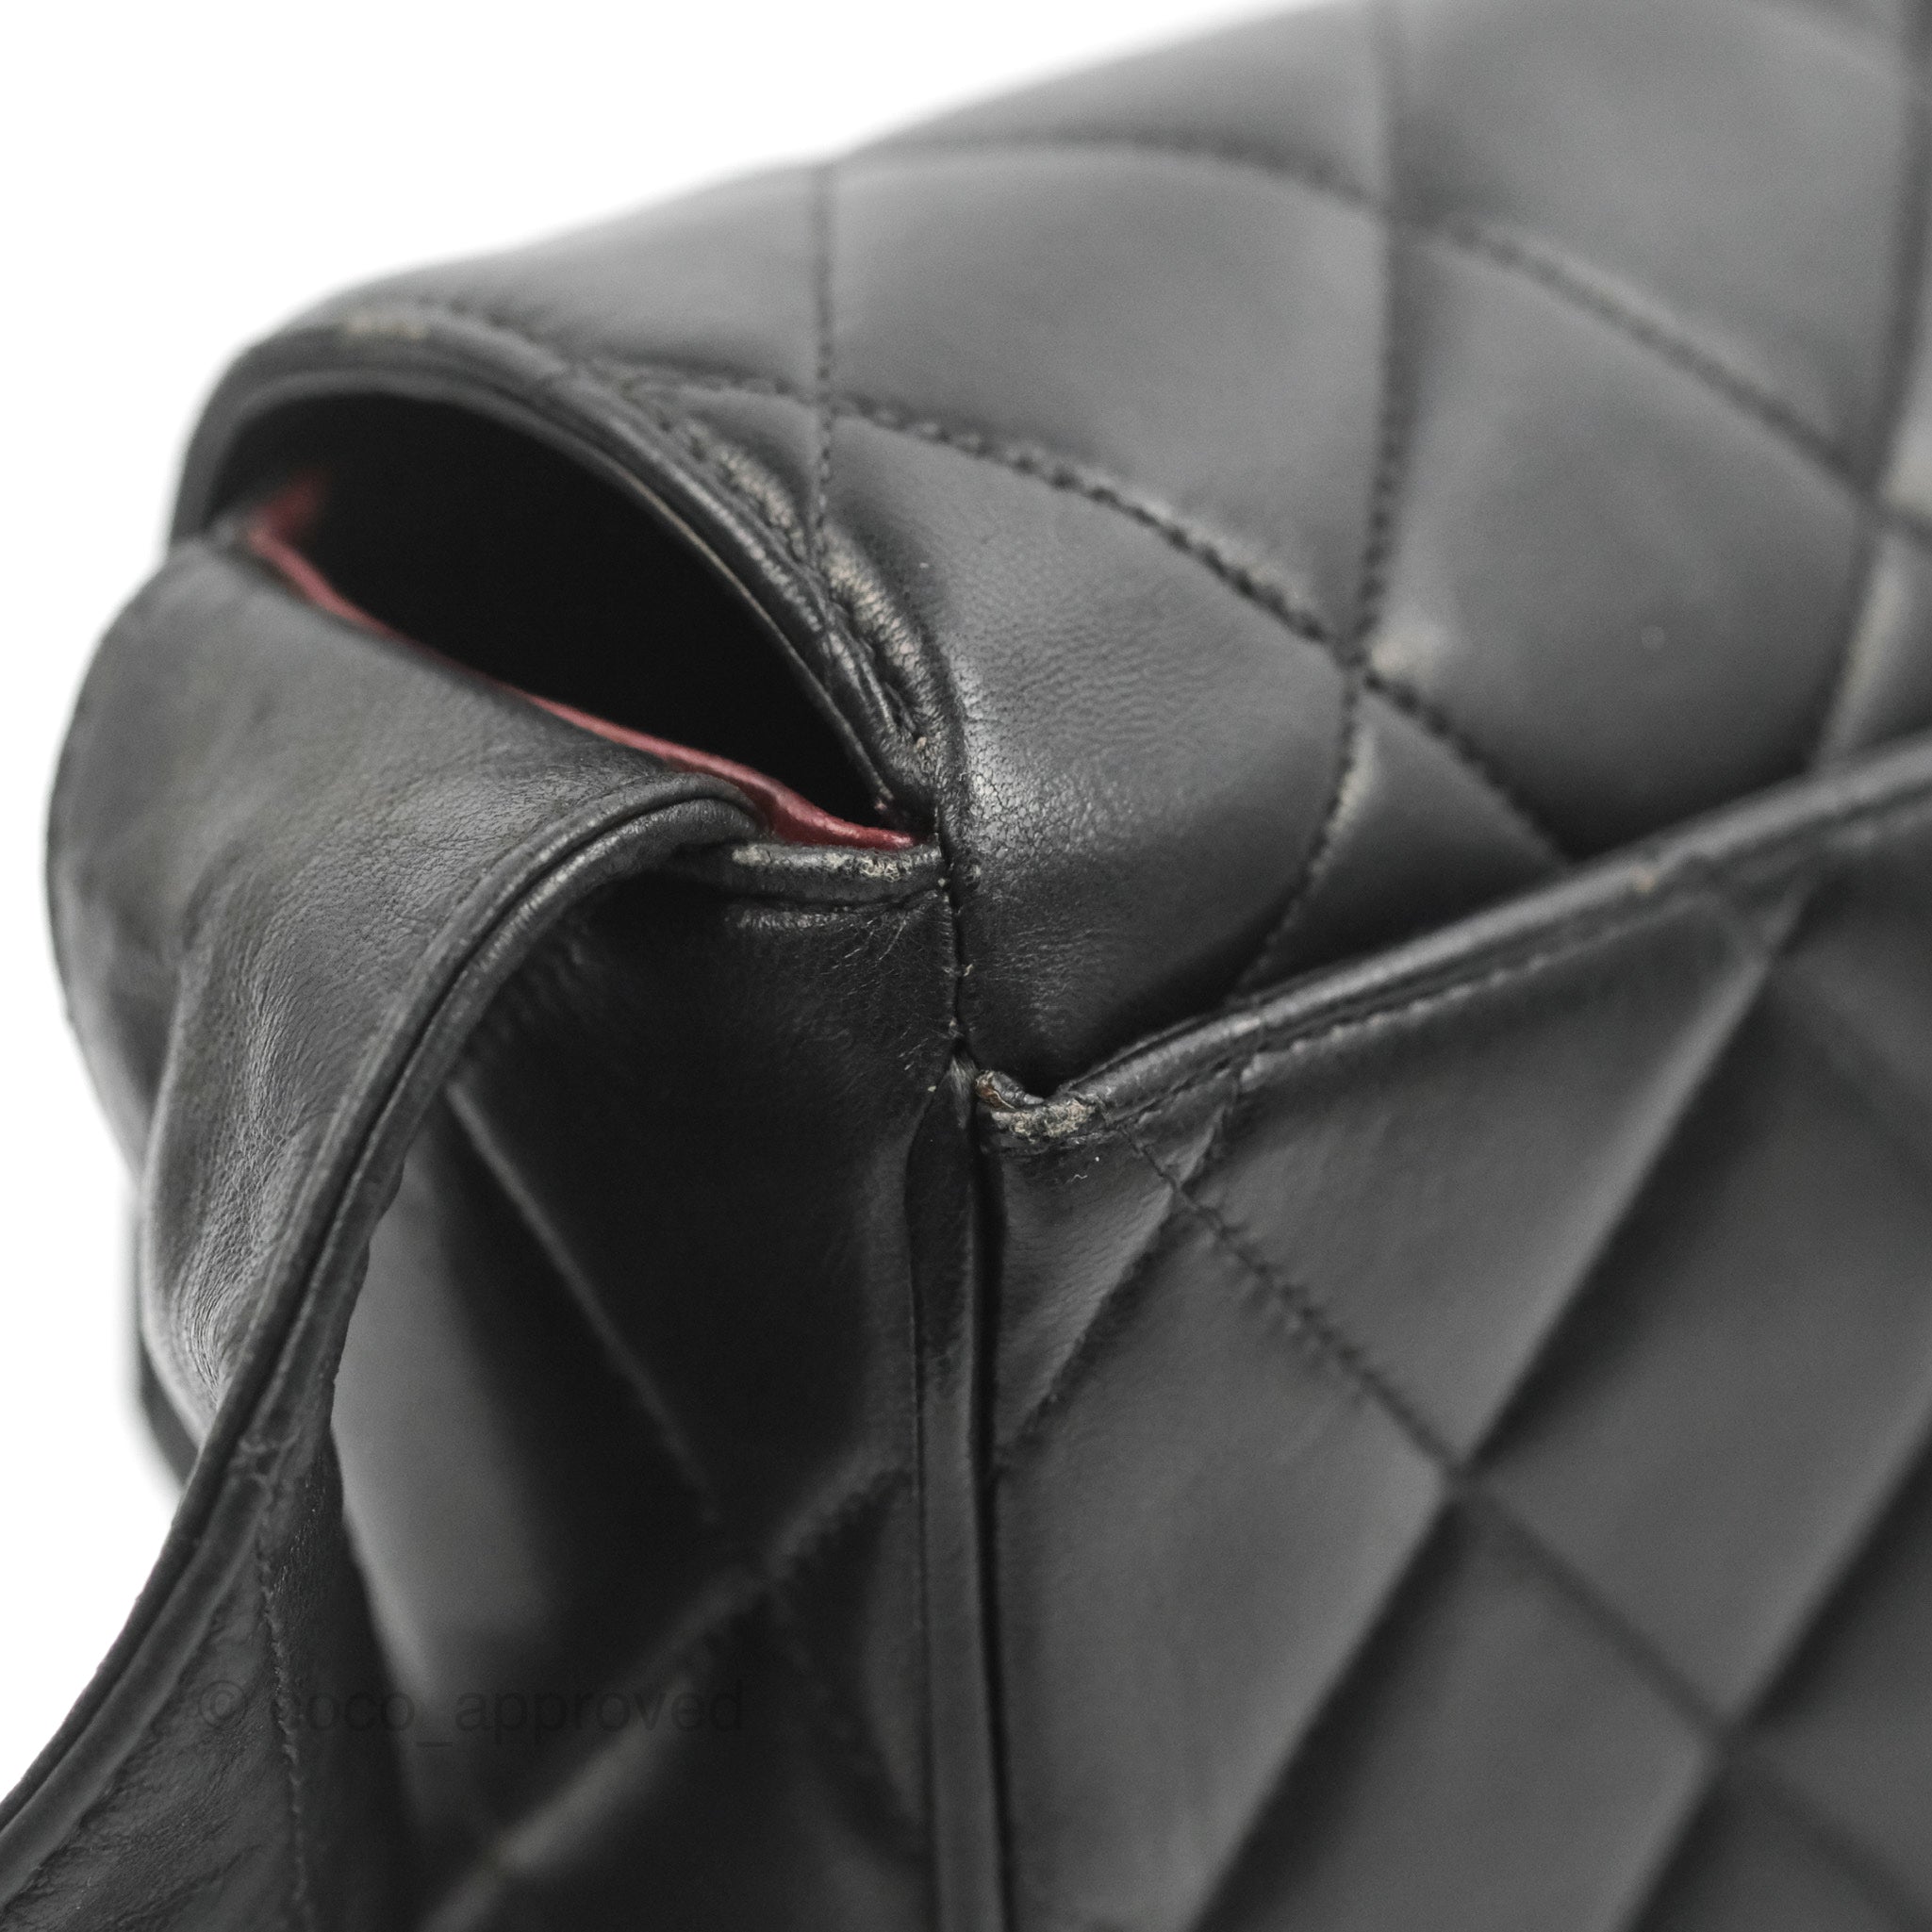 Chanel Vintage CC Quilted Shoulder Bag So Black Lambskin – Coco